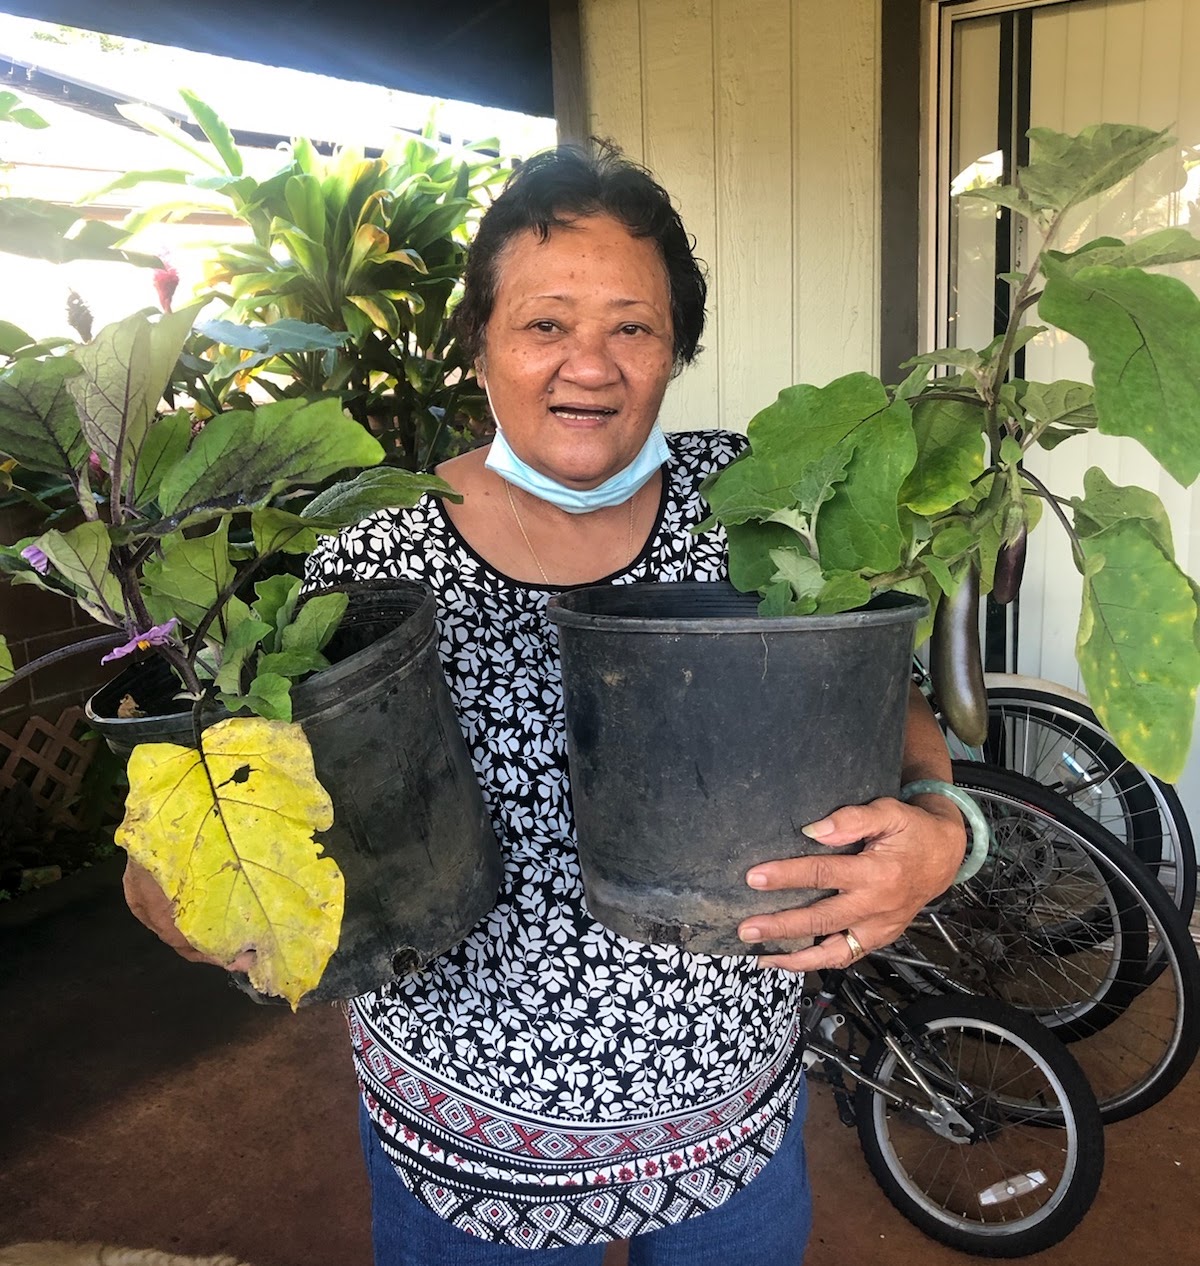 Senior citizen with final plant